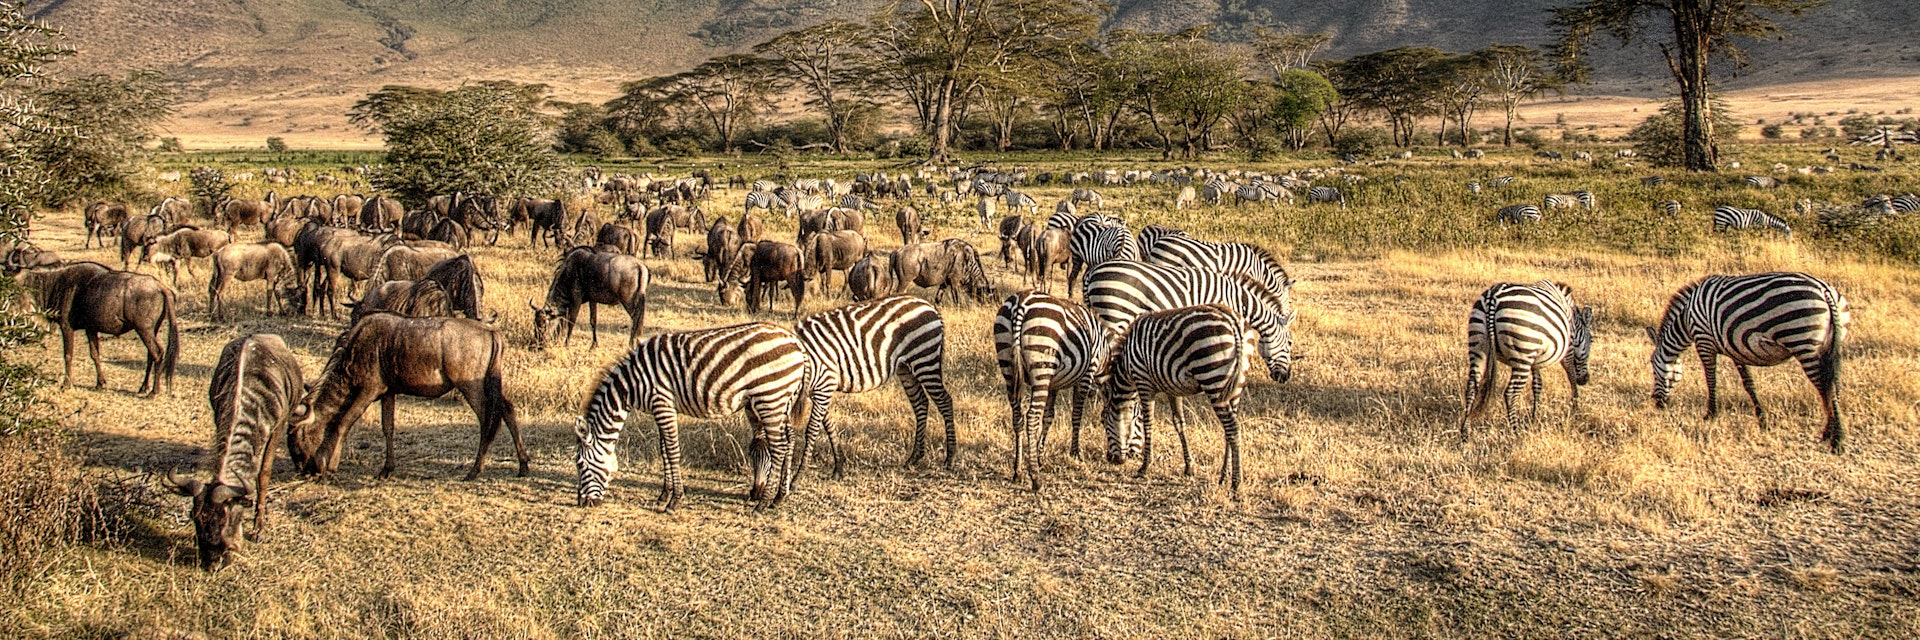 525334221
Africa; Animals In The Wild; Biodiversity; Ngorongoro Conservation Area; Ngorongoro Crater; Outdoors; Photography; Safari; Safari Animals; Wildebeest; Zebra; Horizontal; Tanzania;
The Ngorongoro Crater teeming with grazing wildlife.